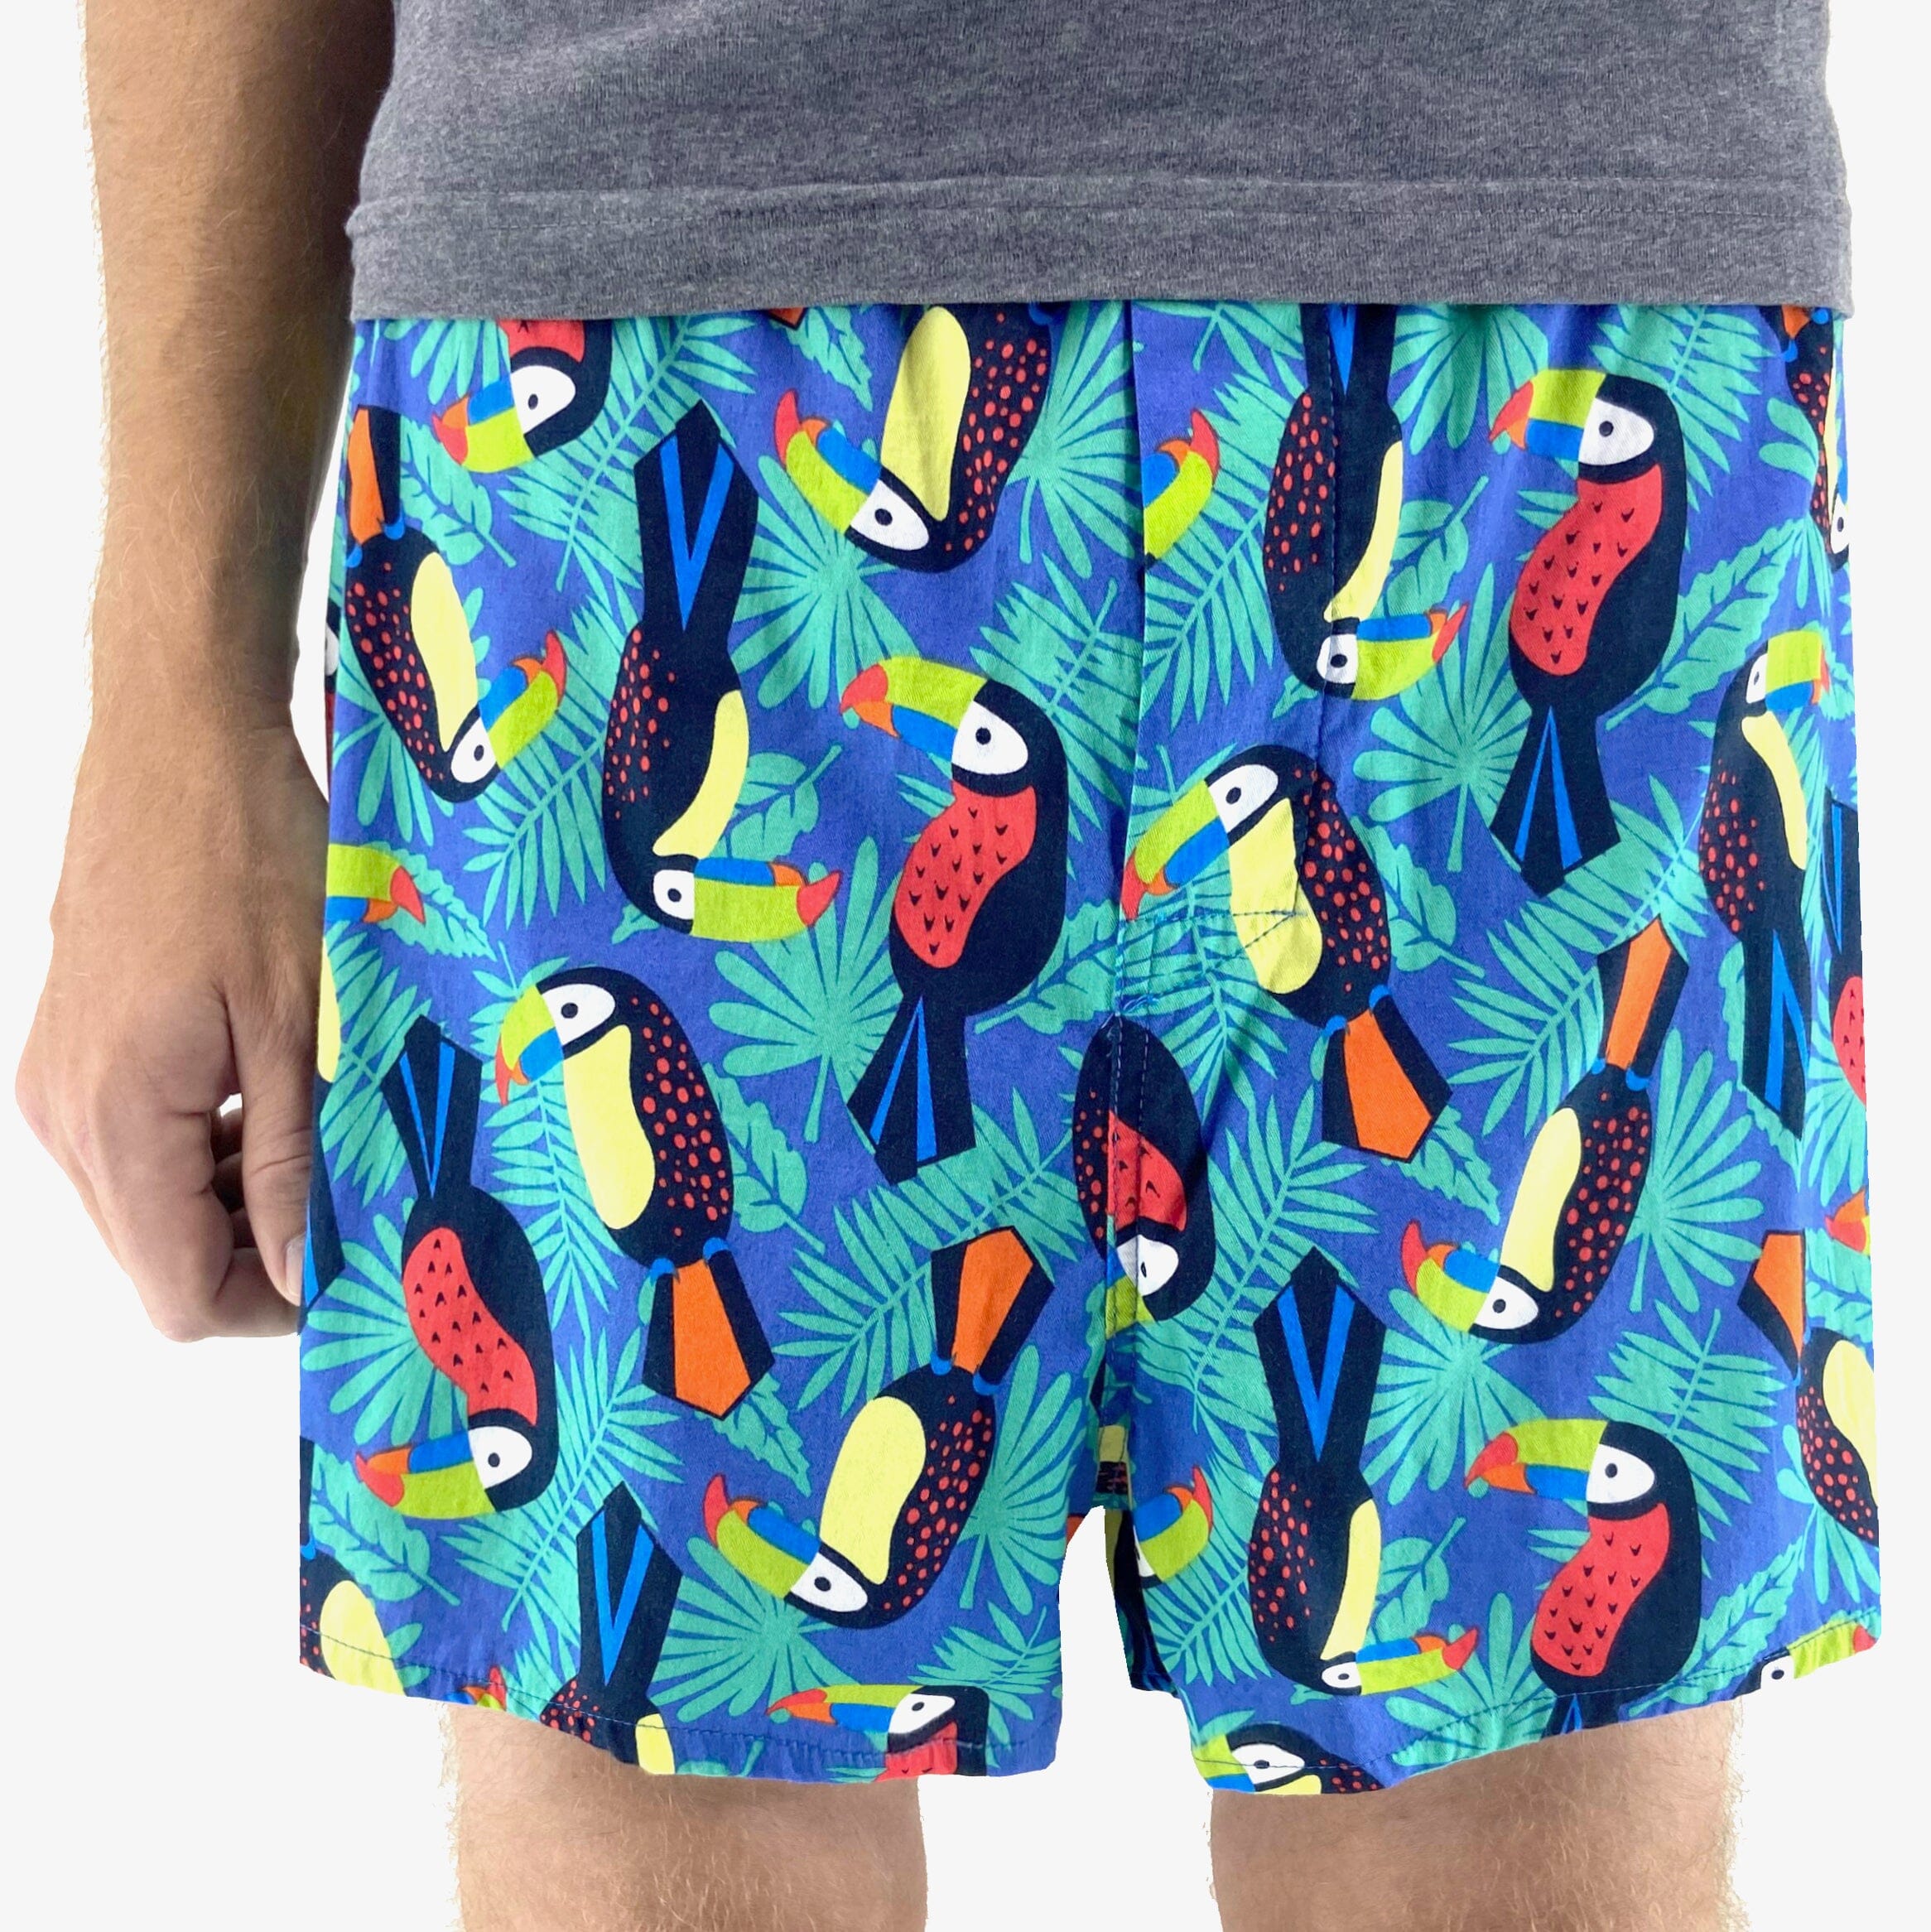 PULLIN - Copacabana Men's Fashion 2 Boxer Shorts, Multicoloured, XS :  : Fashion